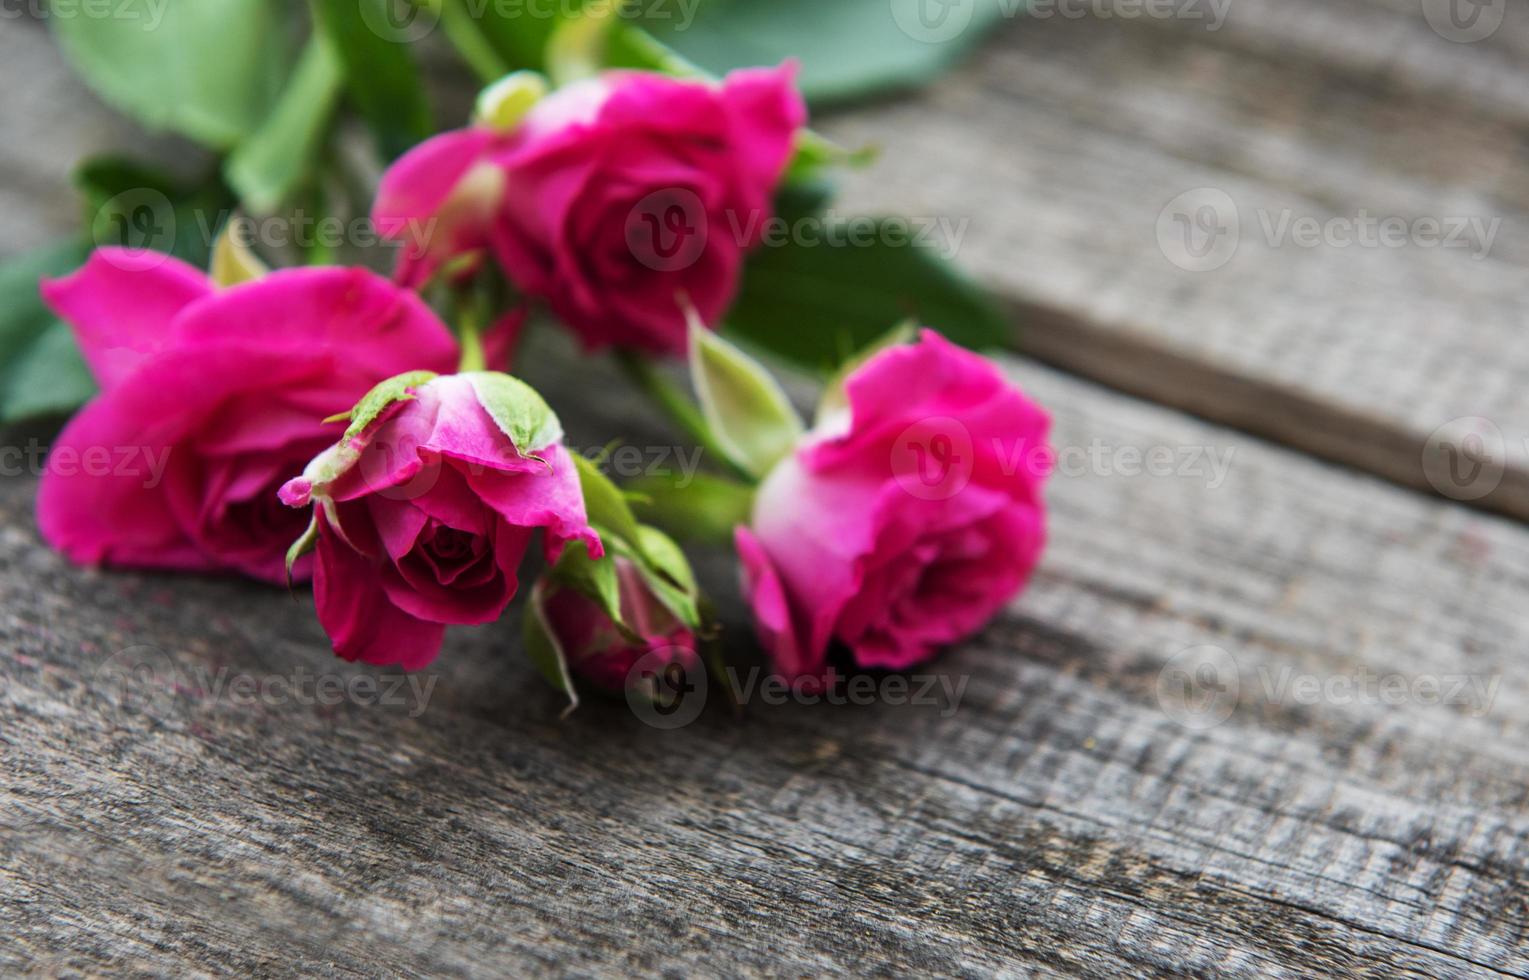 rosa rosor på ett bord foto